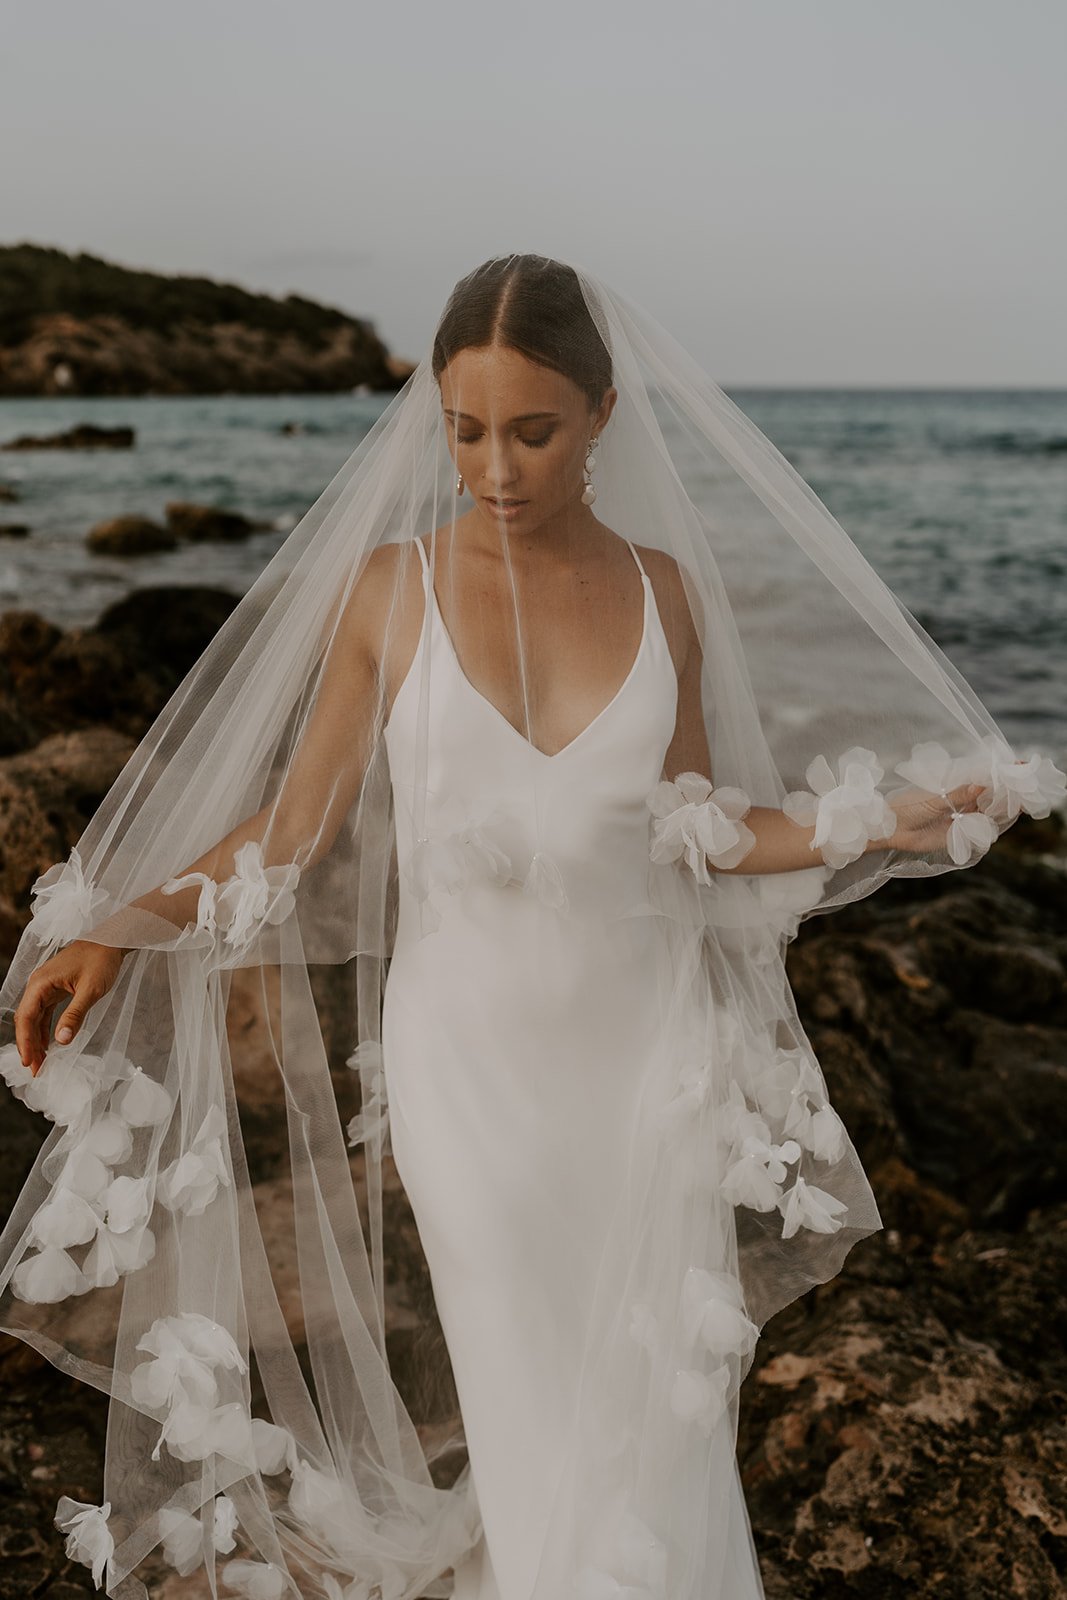 Should You Wear a Long or Short Wedding Veil? About Veil Lengths